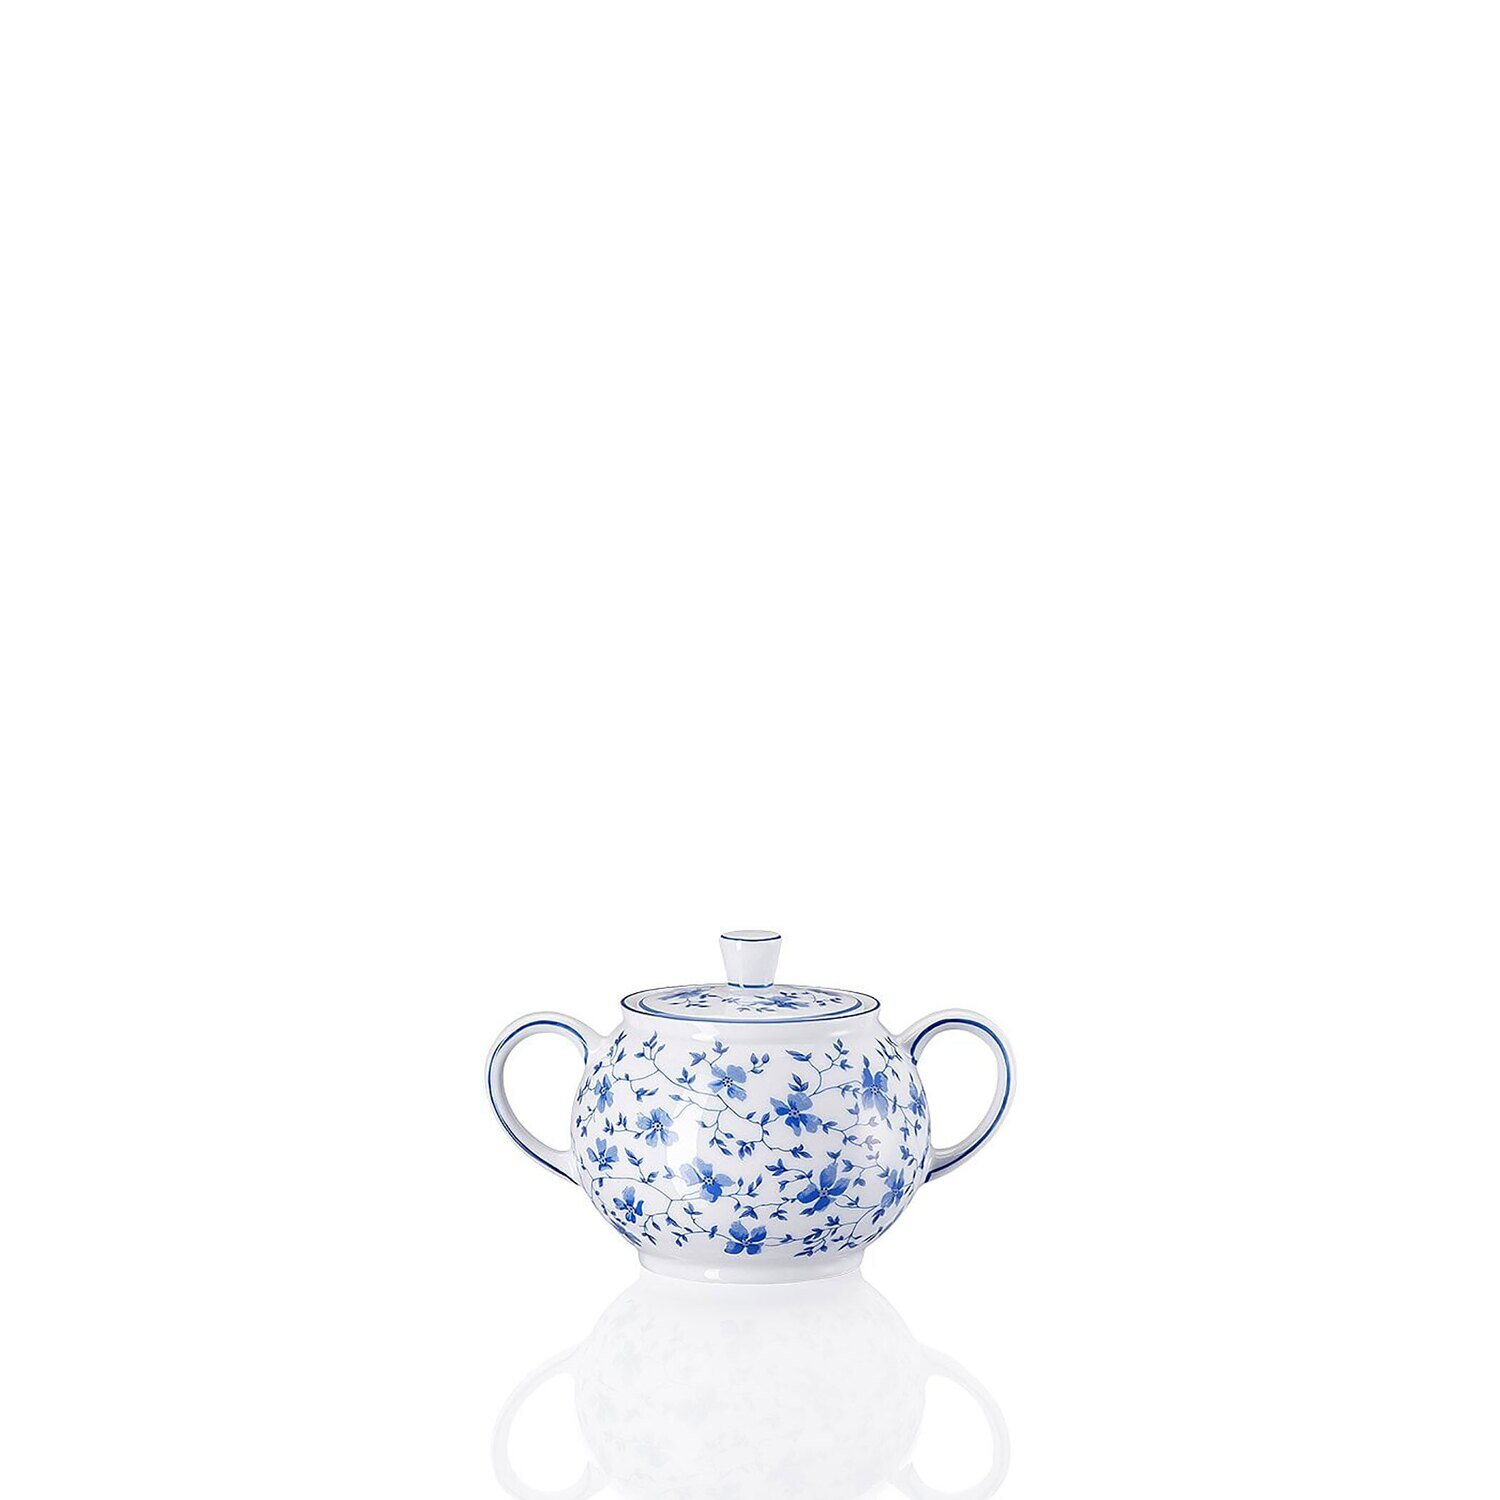 Arzberg Form 1382 Blaubluten Sugar Bowl 3